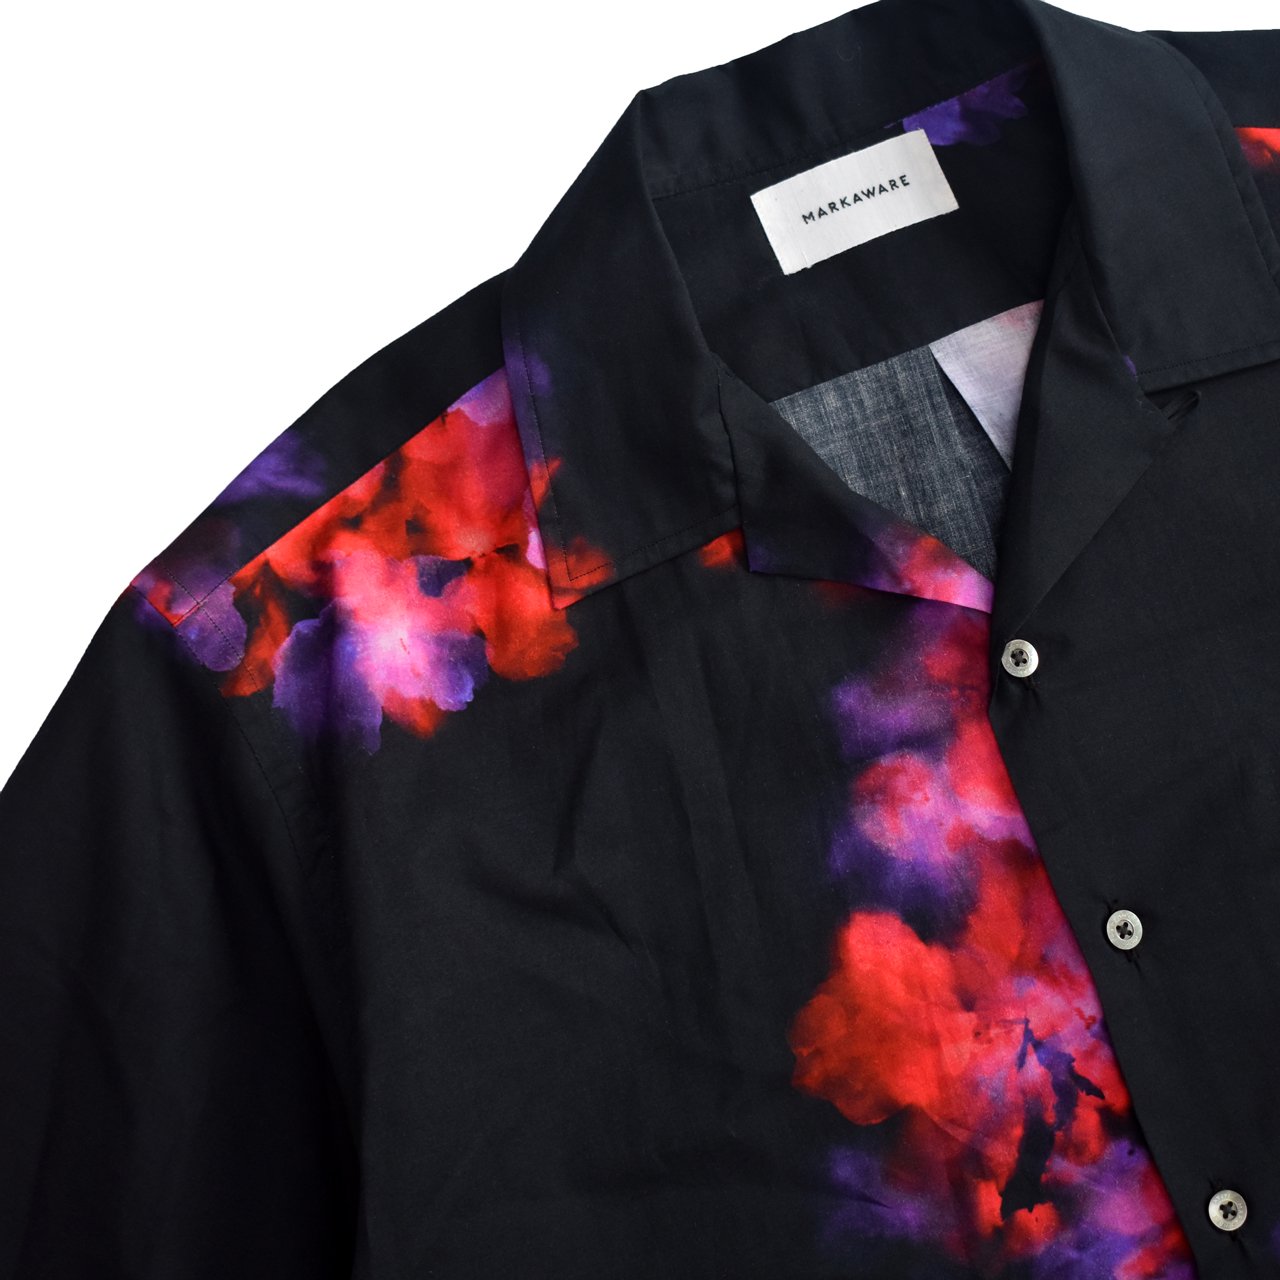 MARKAWARE (マーカウェア)から花柄プリントのオープンカラー半袖シャツ